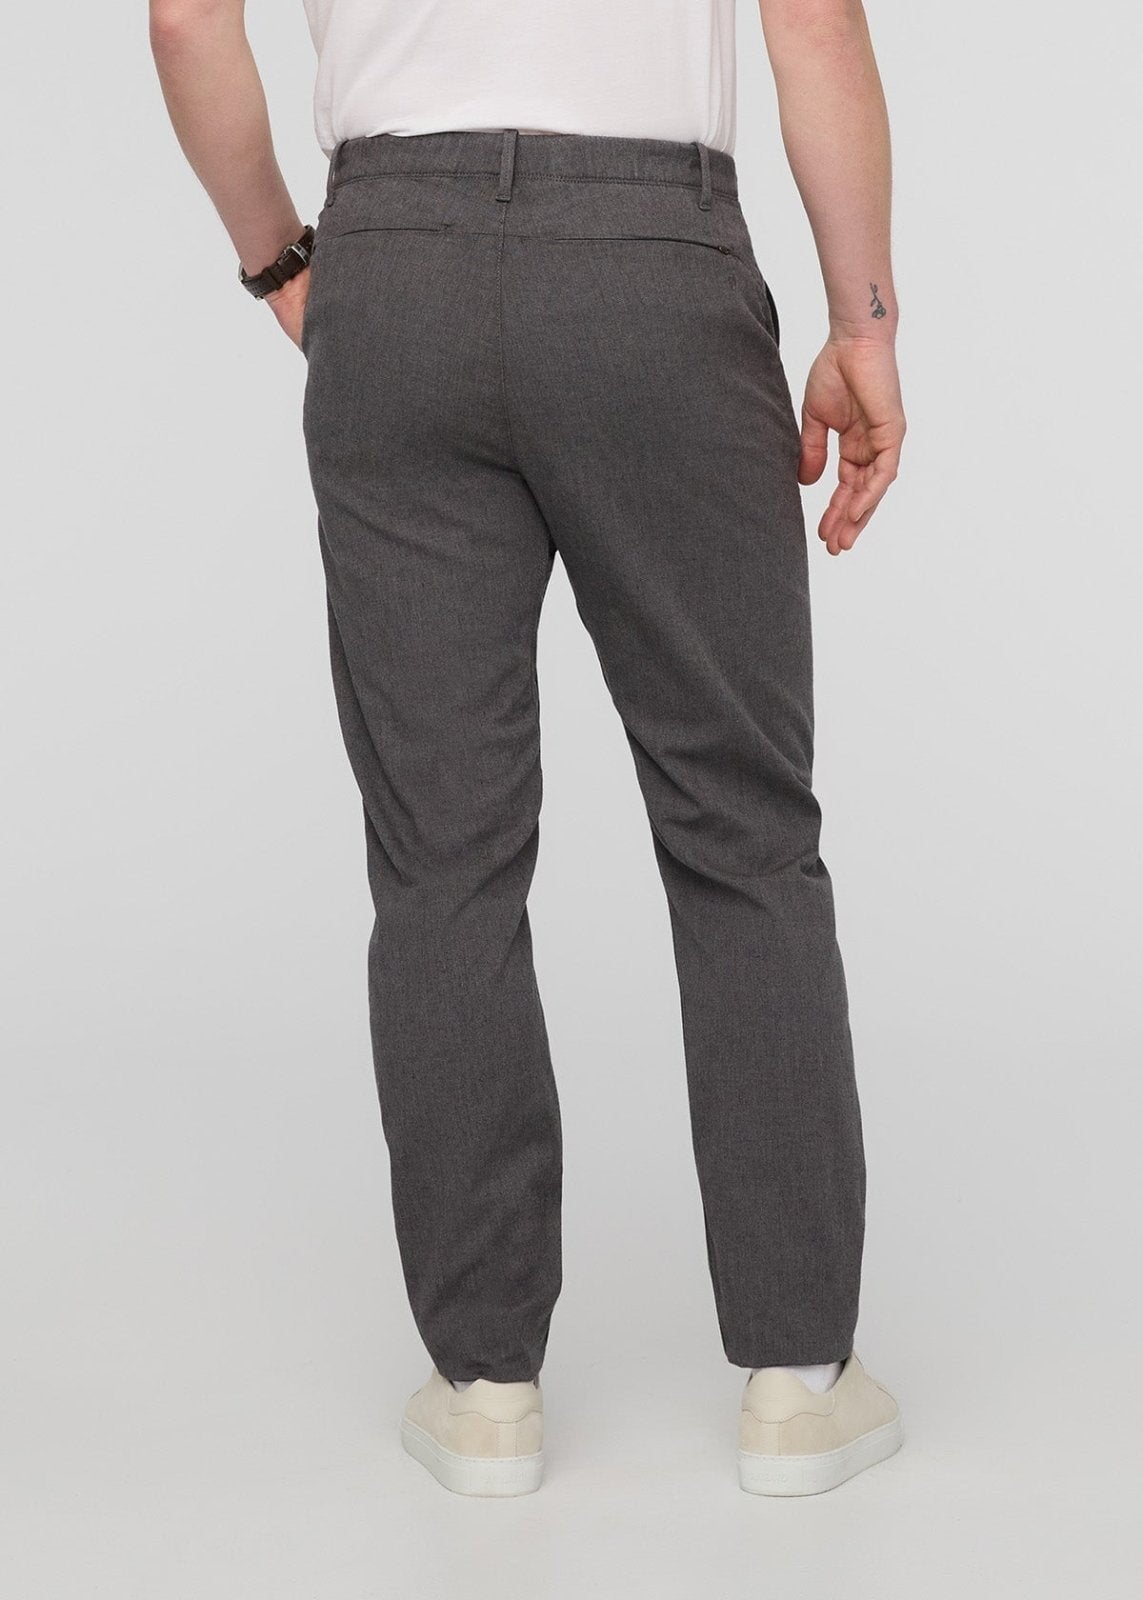 Men's Grey Smart Wool Trousers | Peter Christian